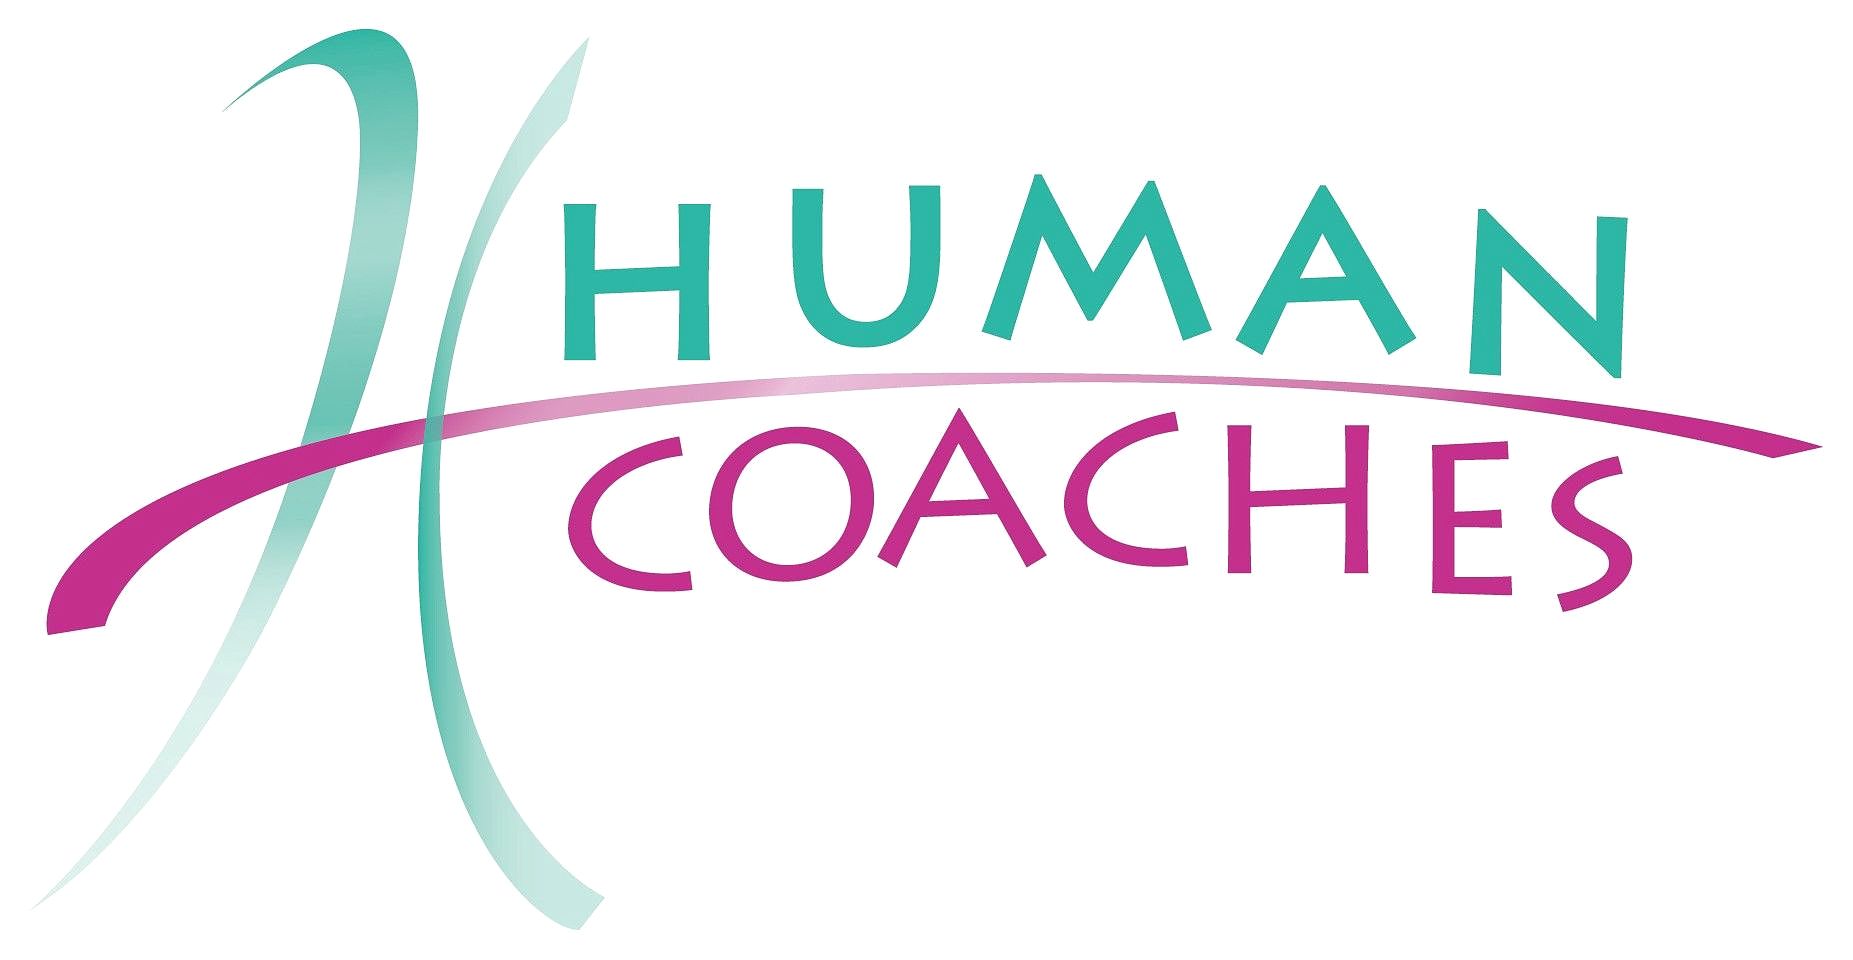 Human coaches